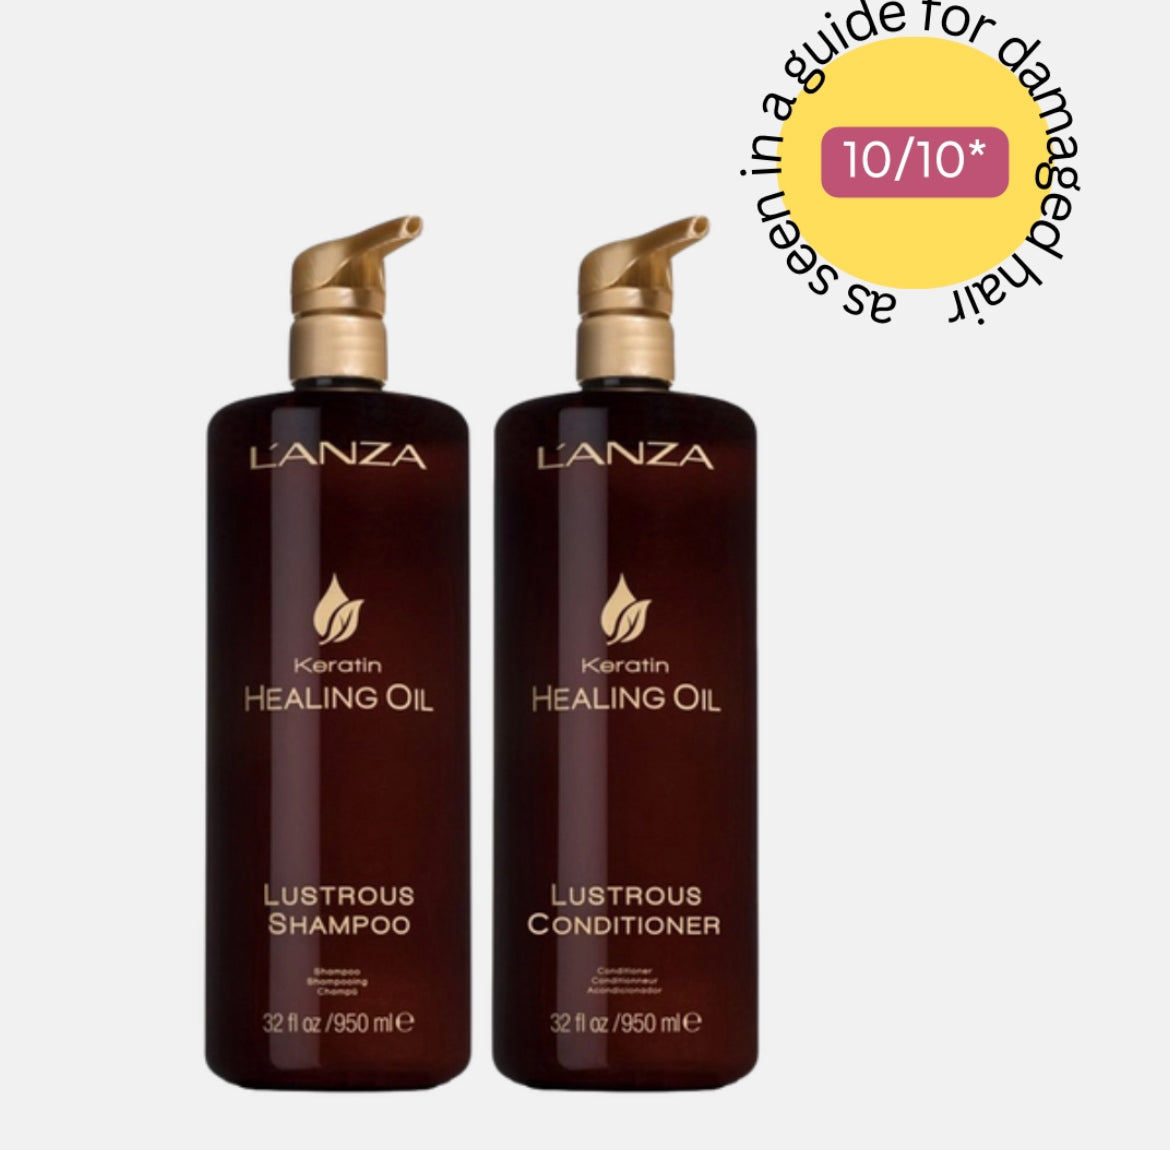 L’anza Healing Oil Shampoo and Conditioner